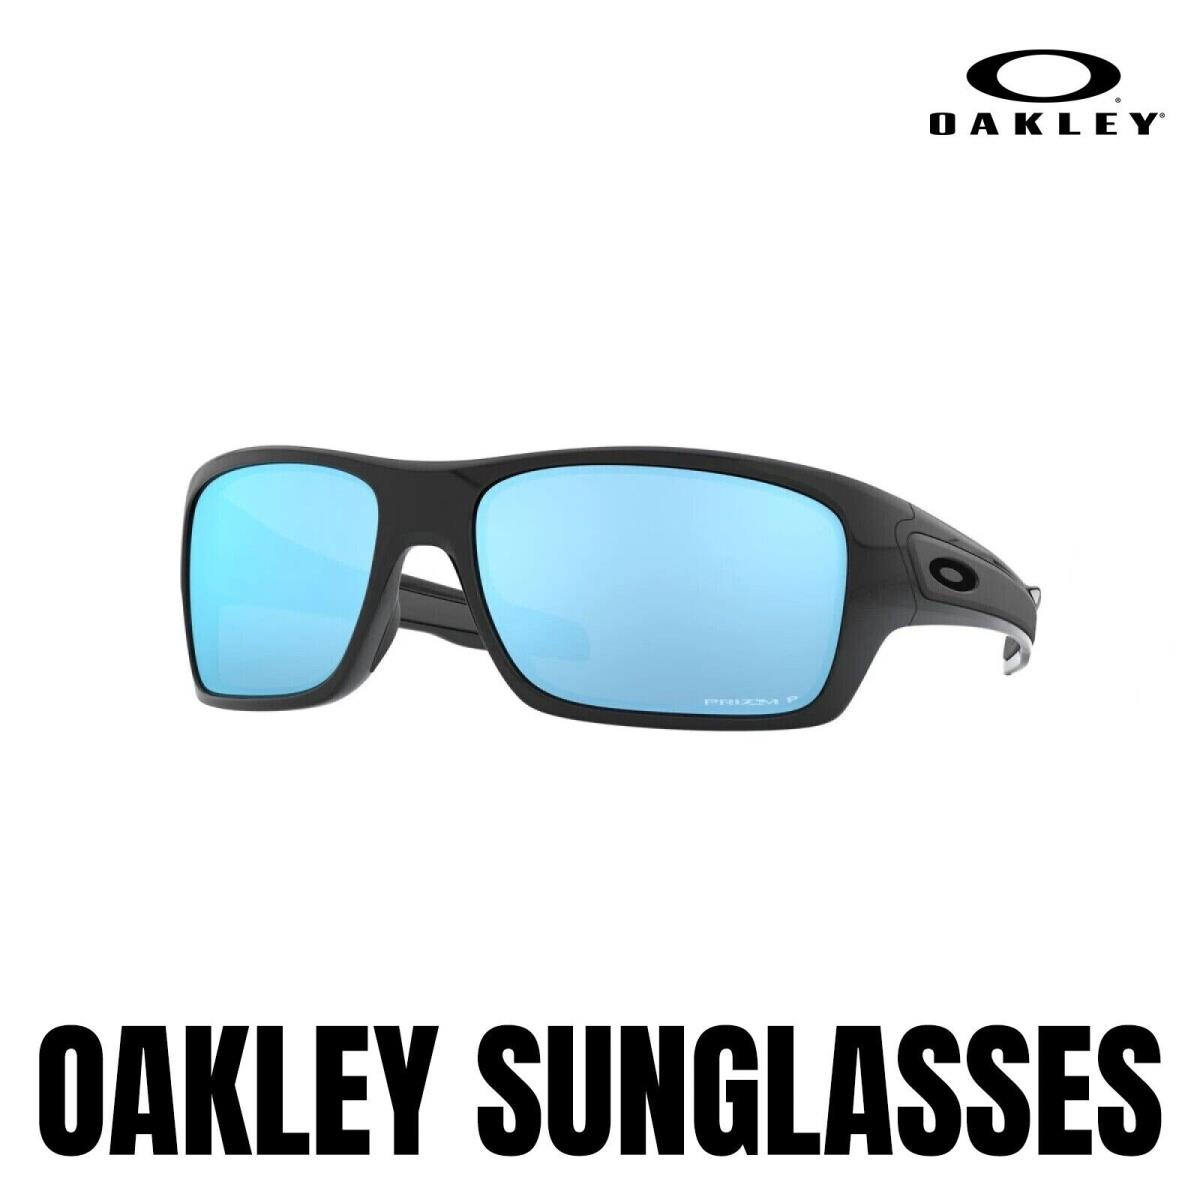 Oakley OO9263-14 Turbine Polished Black-prizm Deep Water Polarized Sunglasses - Frame: POLISHED BLACK, Lens: